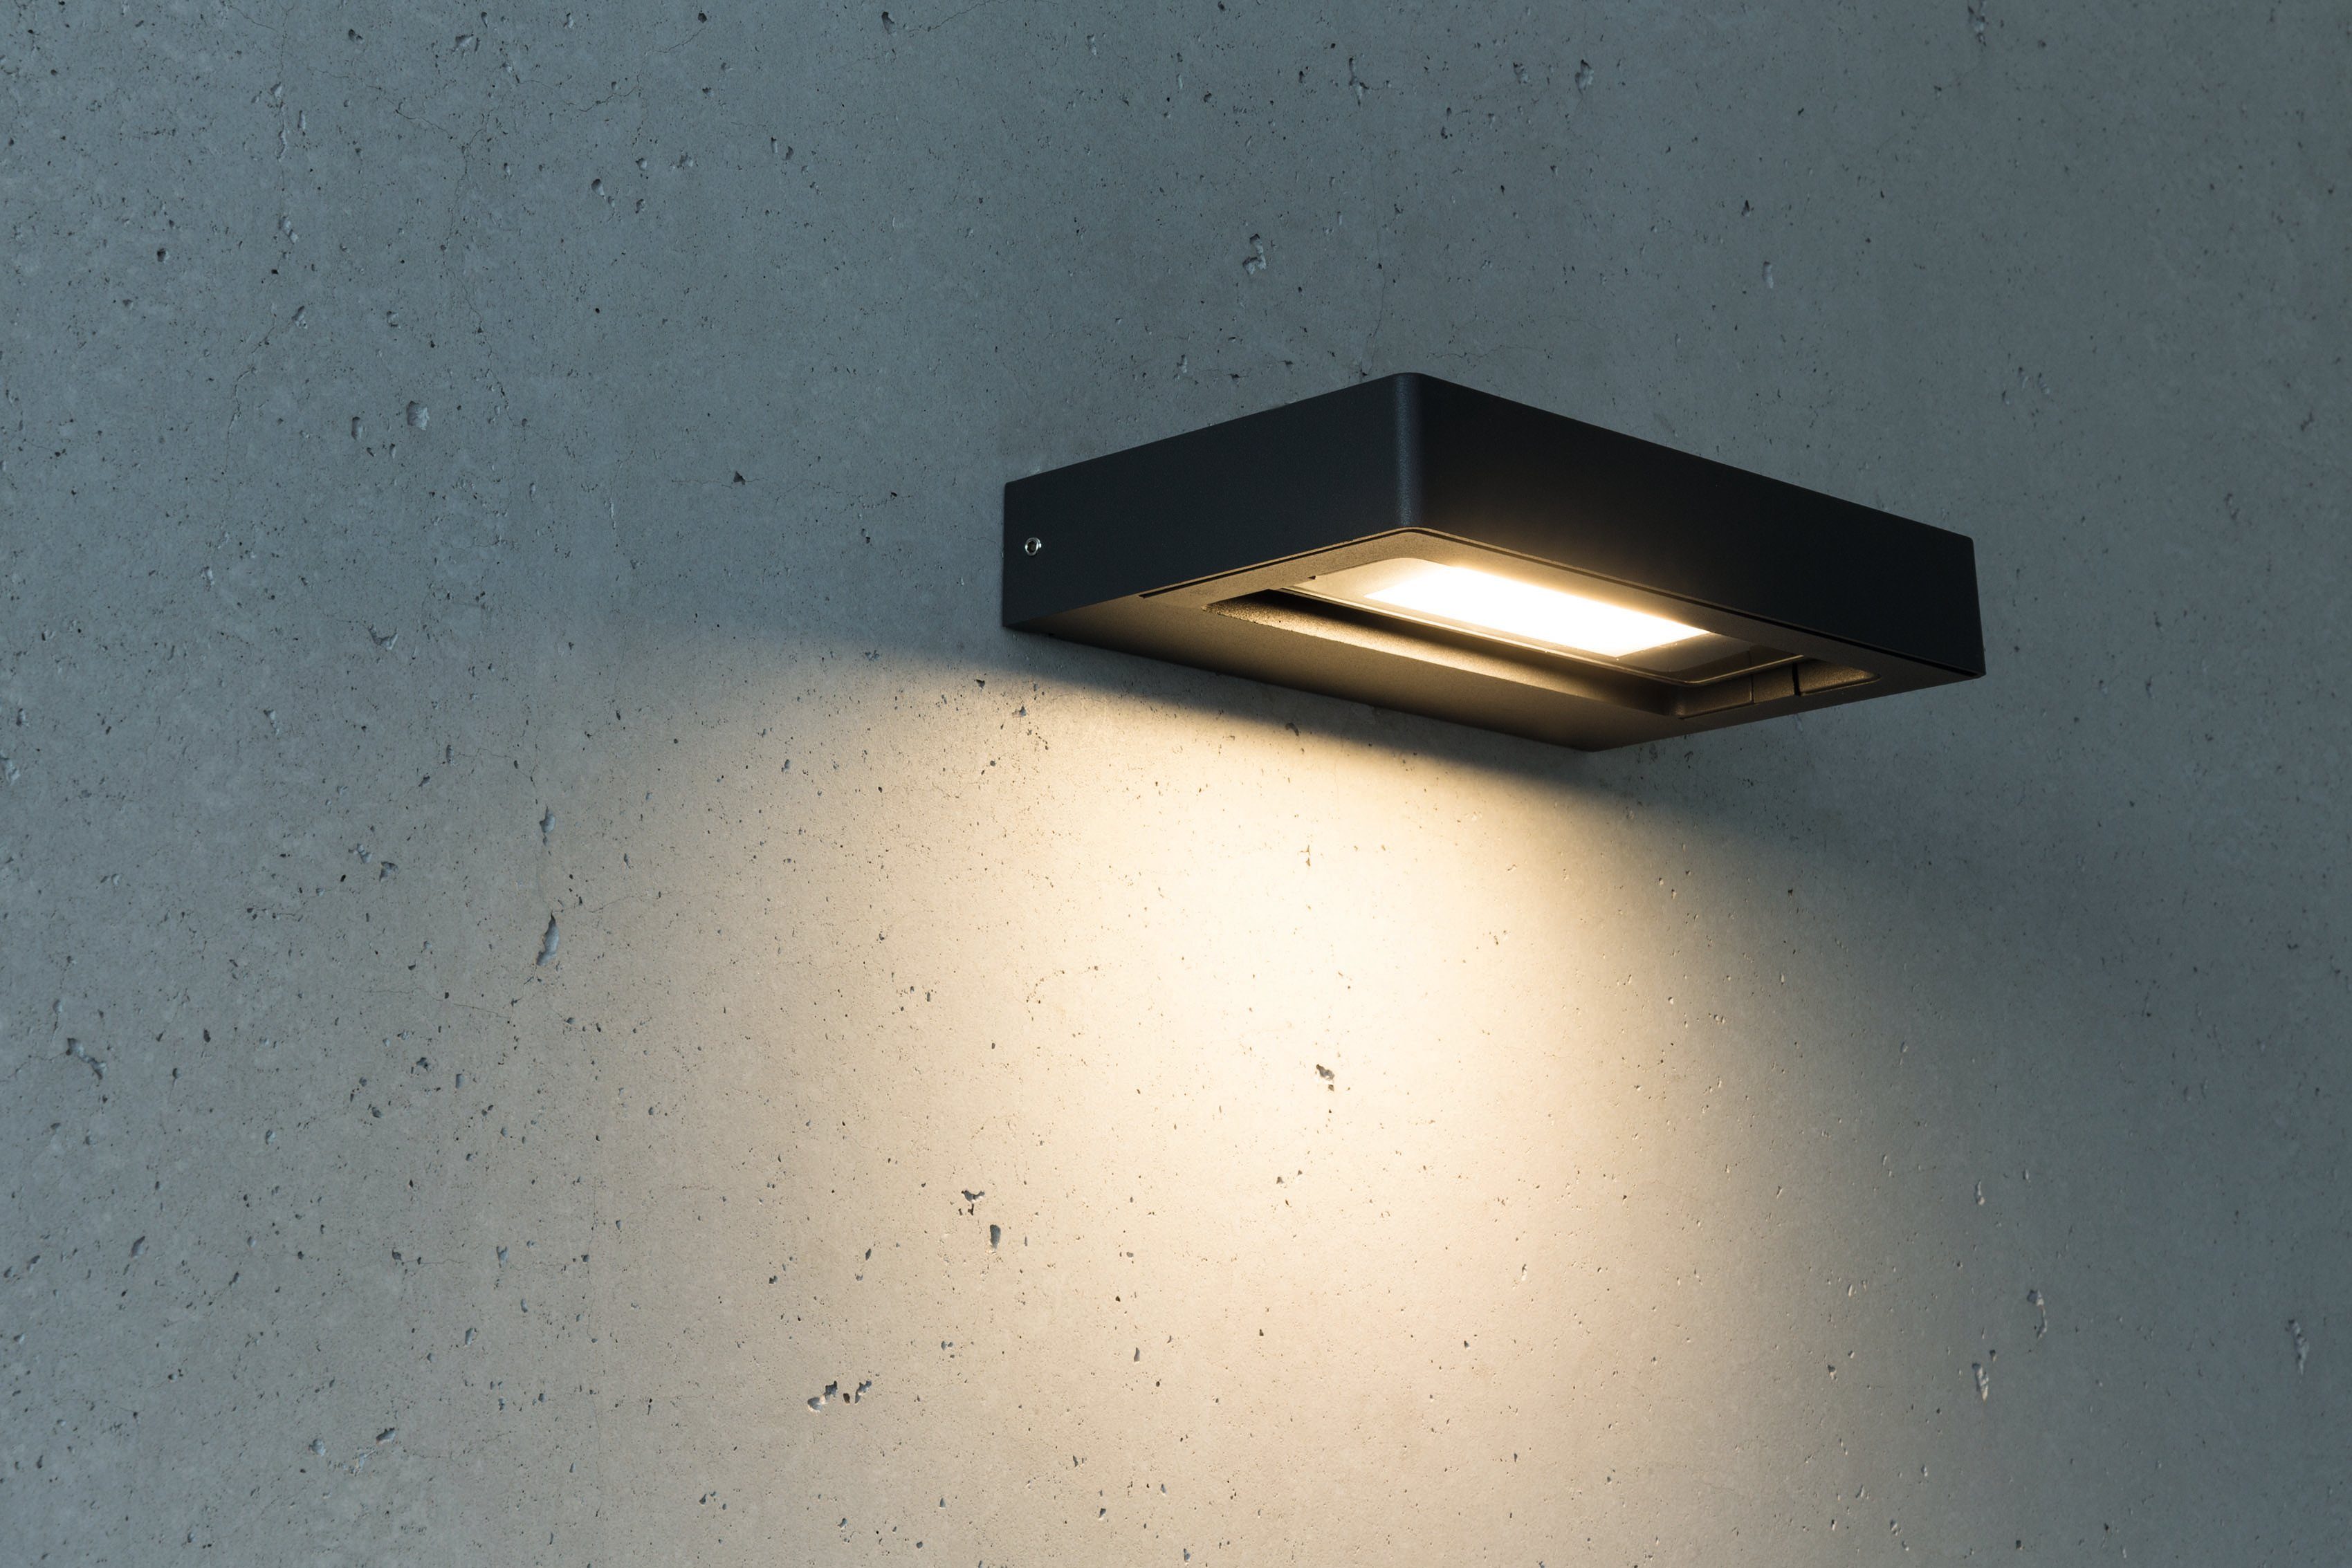 Wandlampe, 320° HEITRONIC integriert, Warmweiß, LED Leuchteinheit fest Außenlampe, Wandleuchte LED Cordoba, schwenkbar um